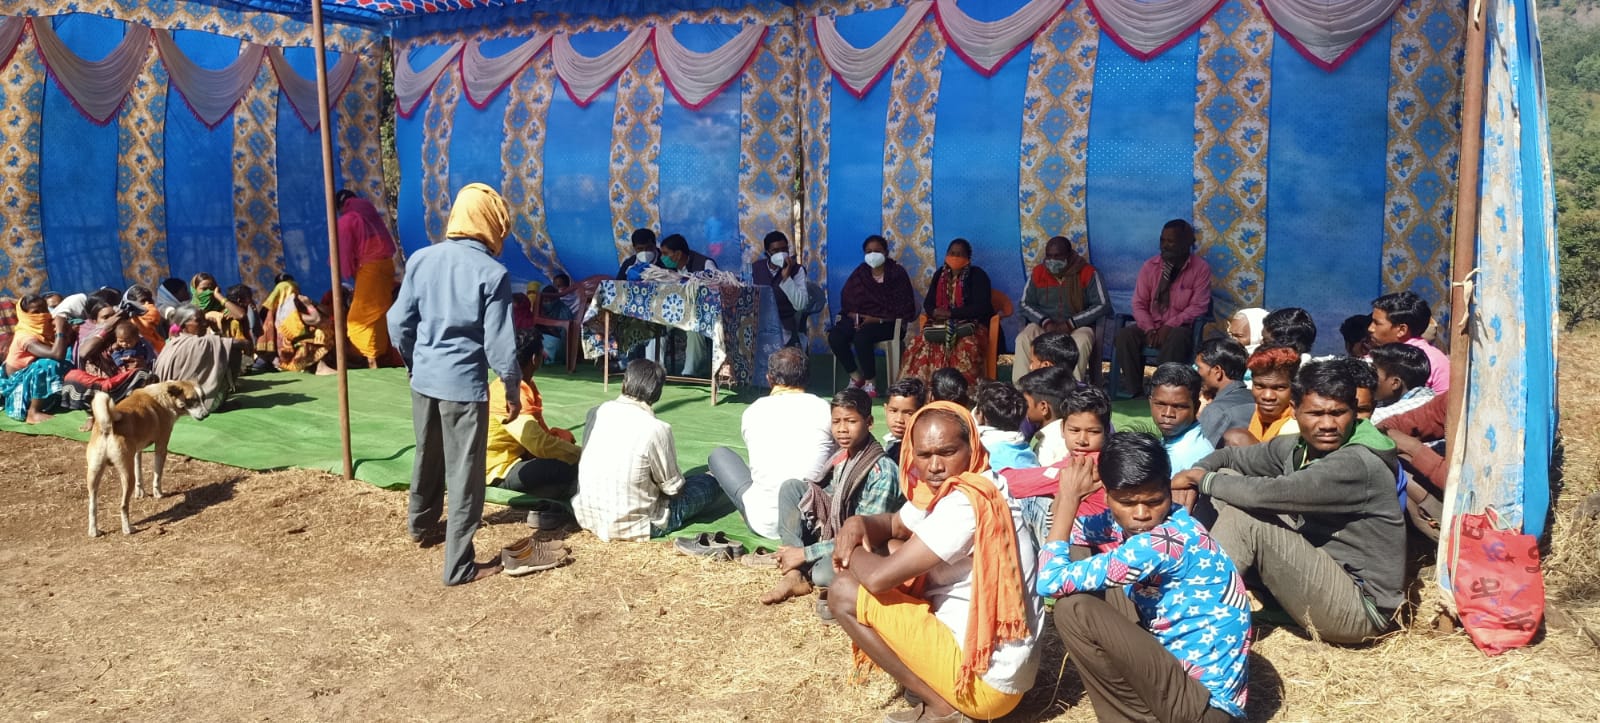 Health staff reached Kaladih, health checkup of more than 150 villager